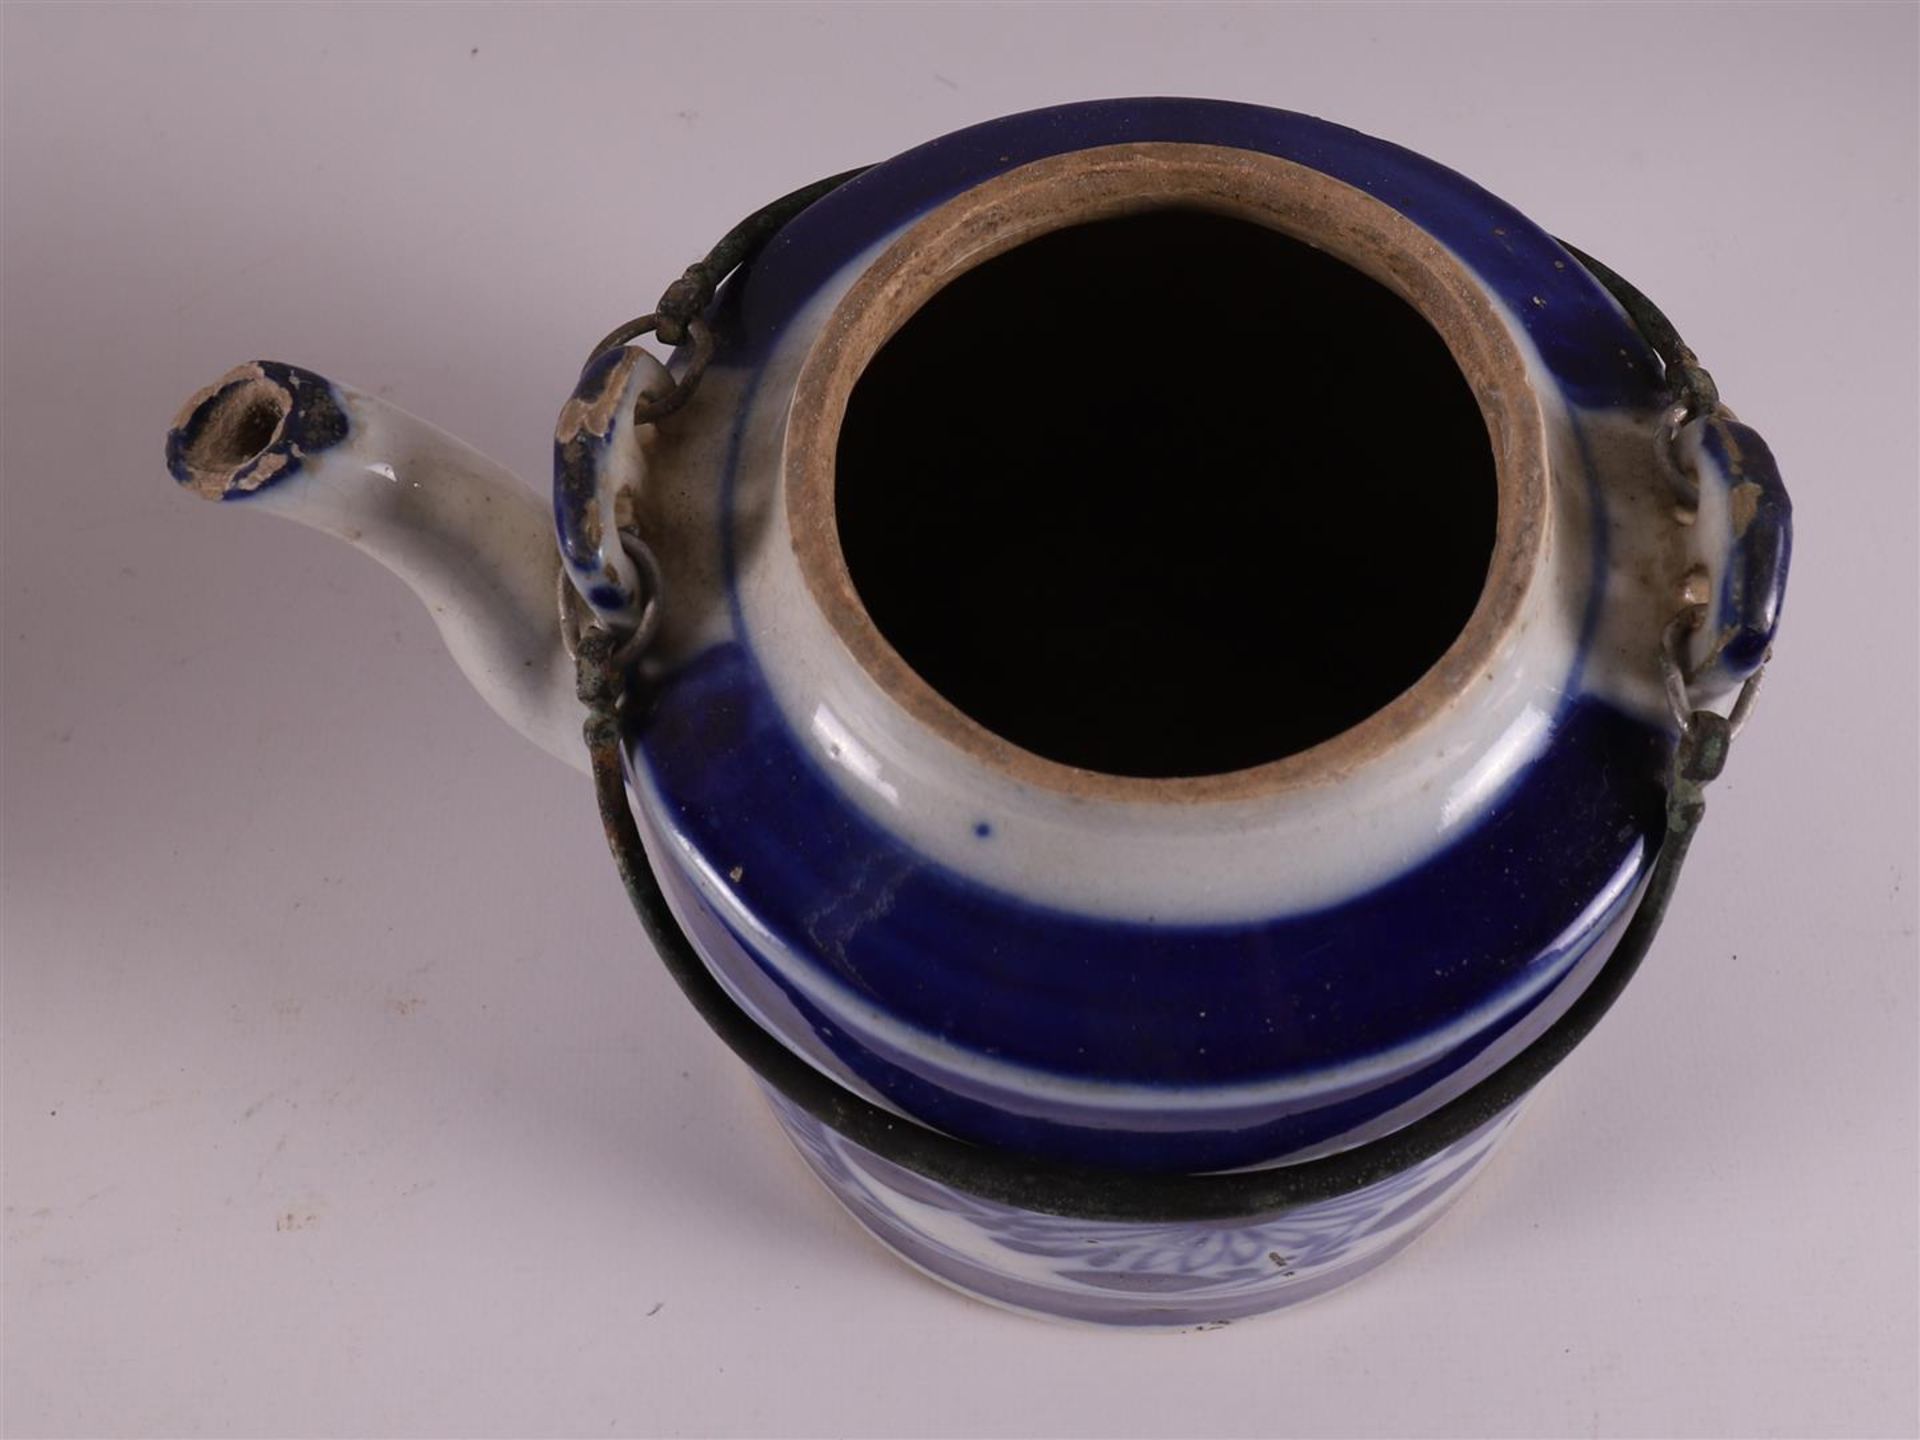 A blue/white porcelain teapot in a wicker case, China, around 1900. - Bild 3 aus 7